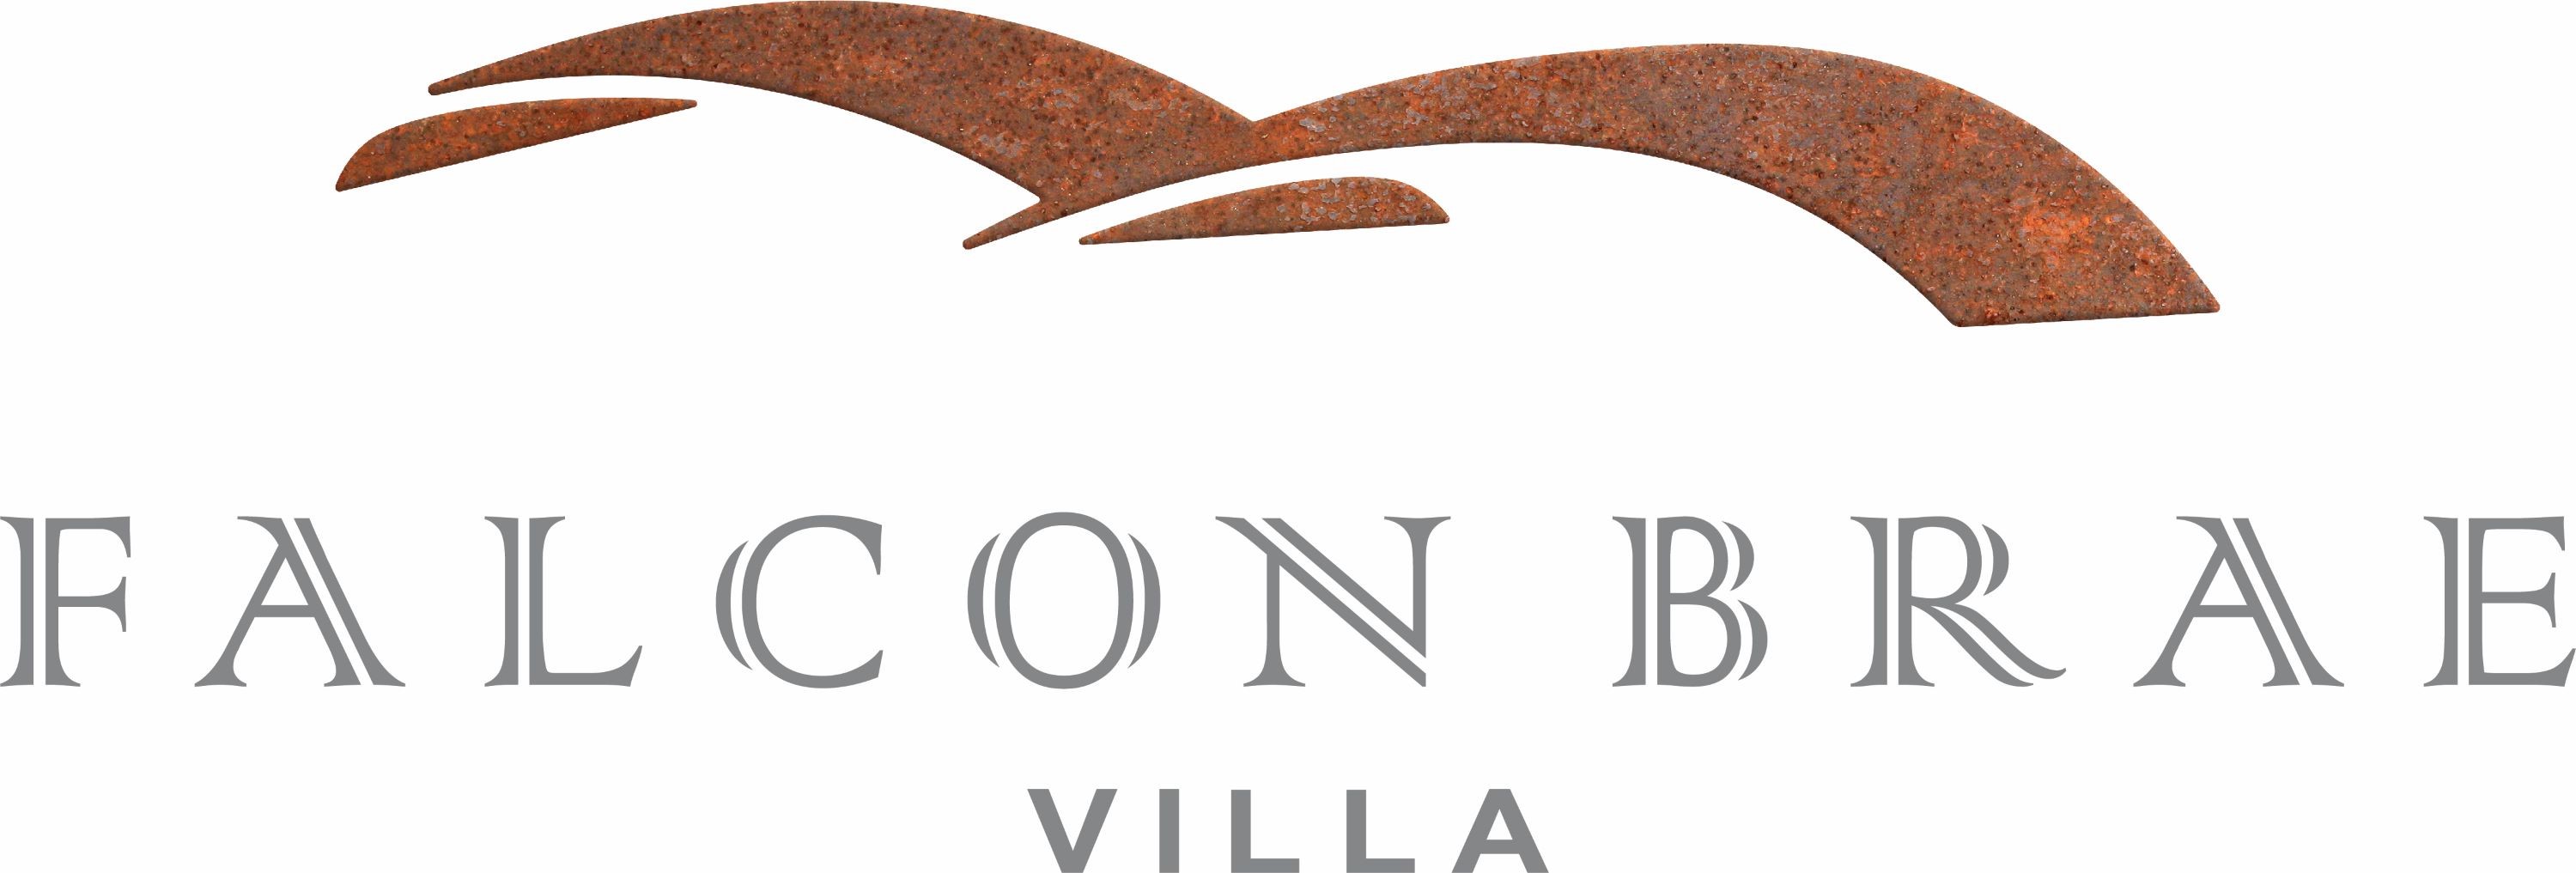 Falcon Brae Villa | Logo